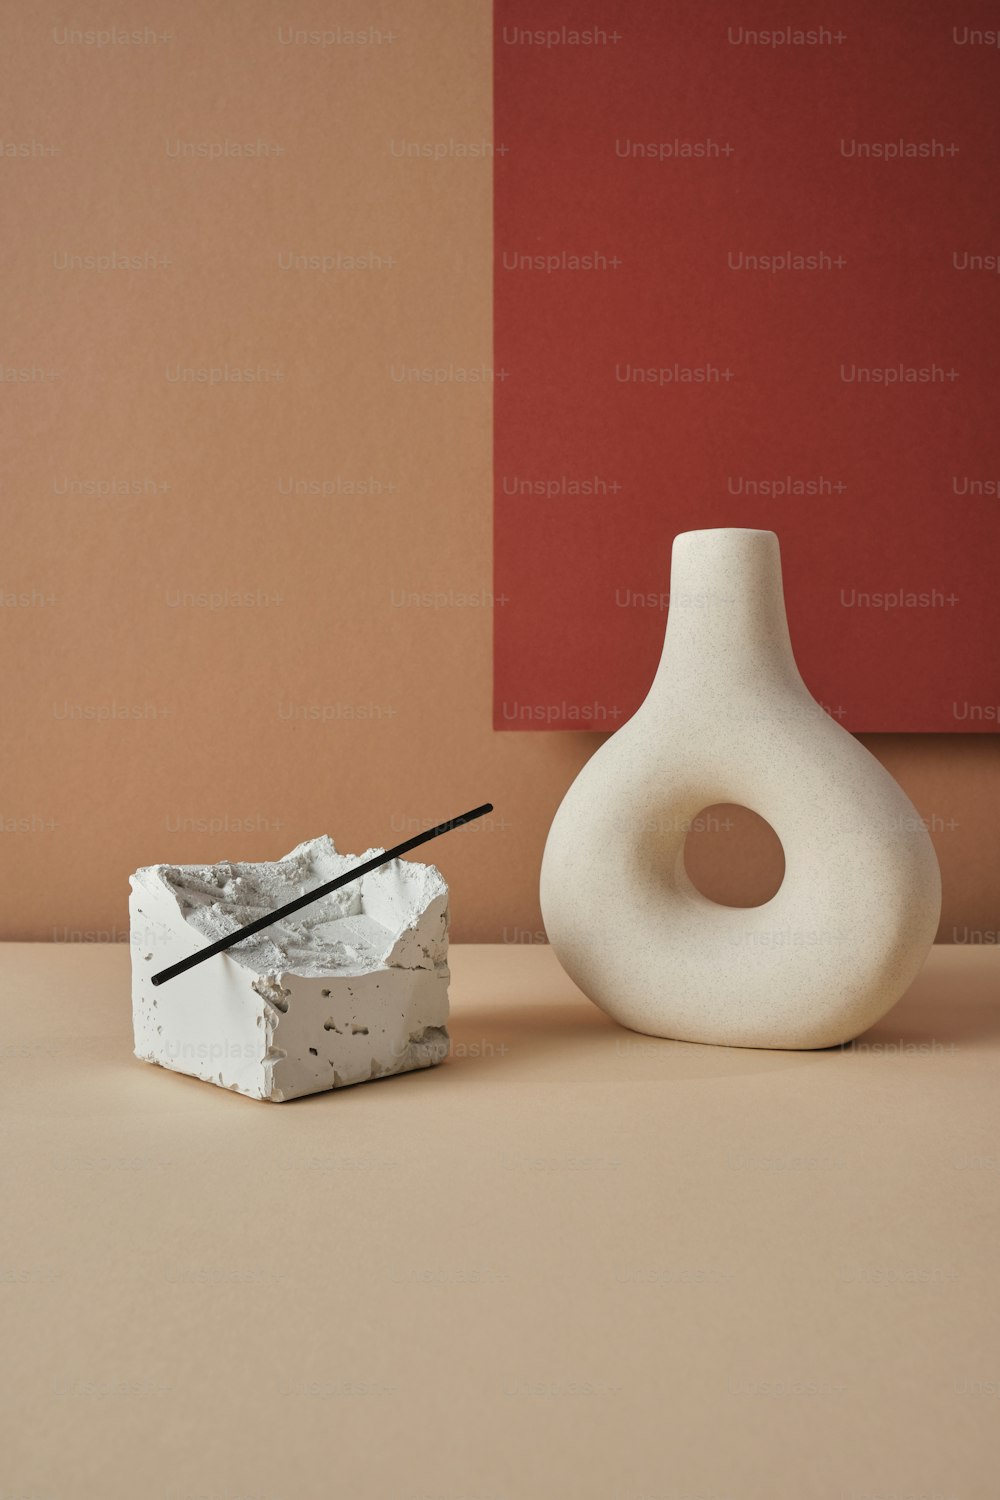 a white vase sitting next to a white object